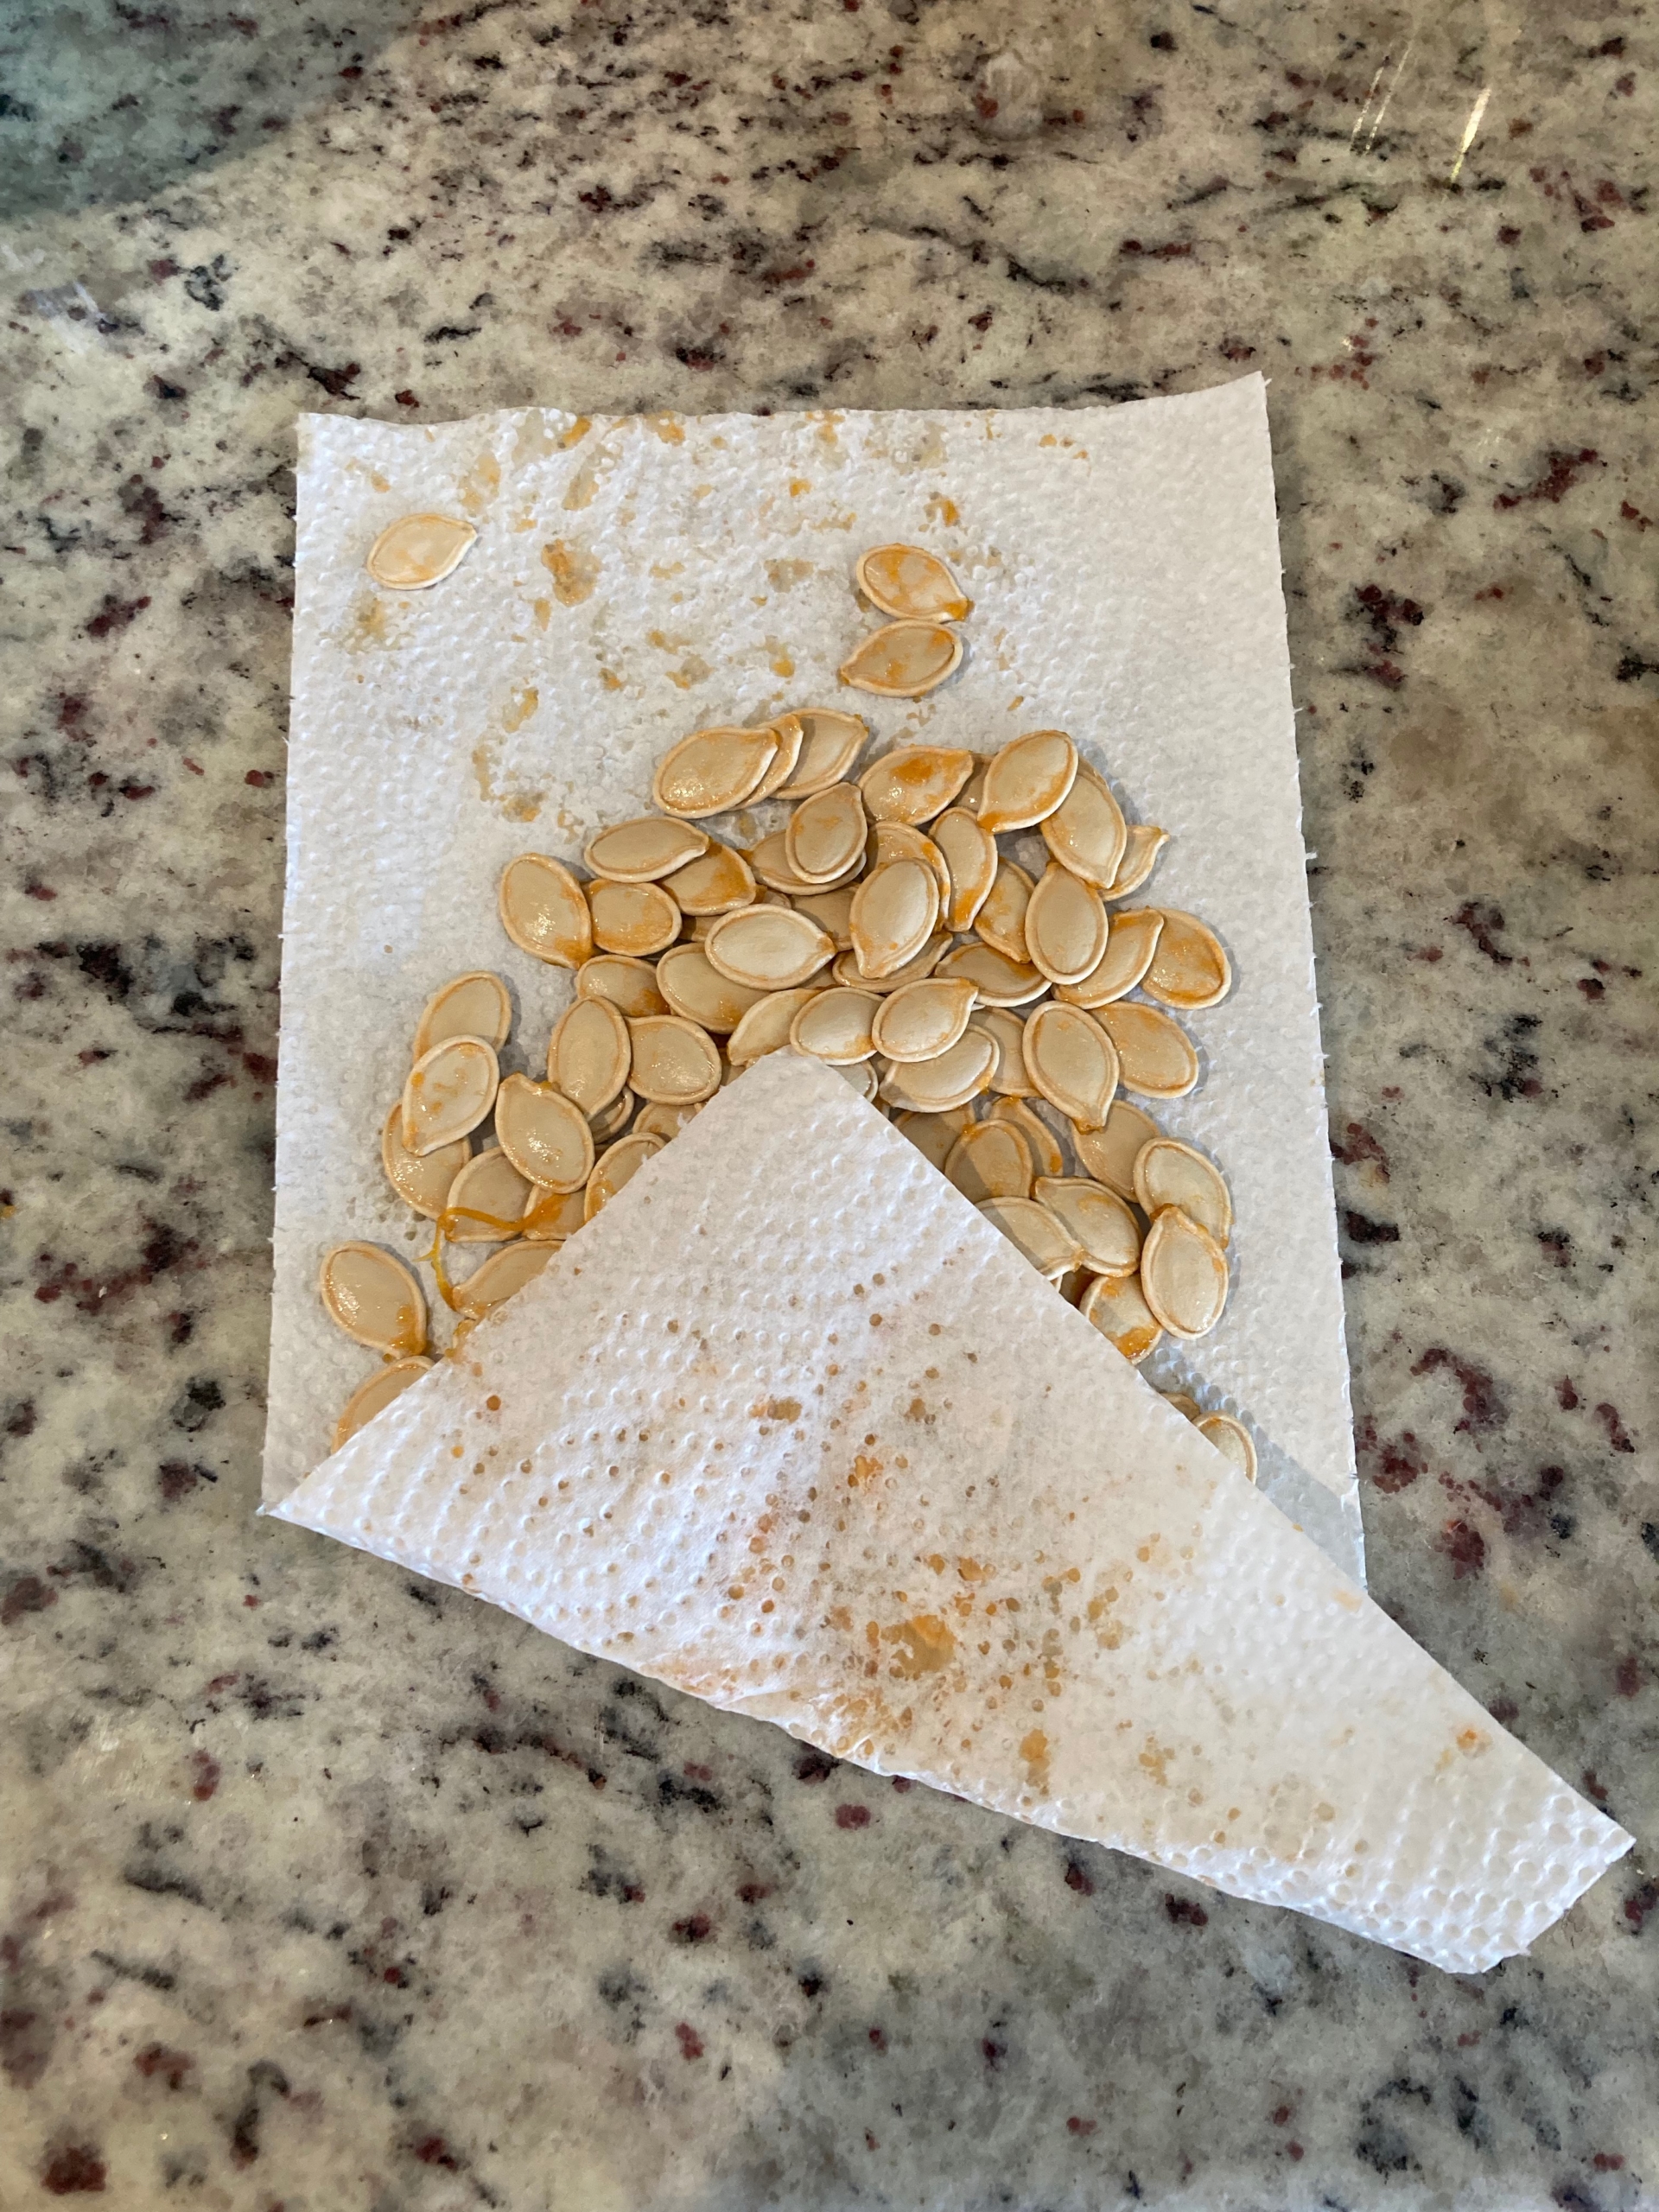 Pumpkin seeds drying on a paper towel